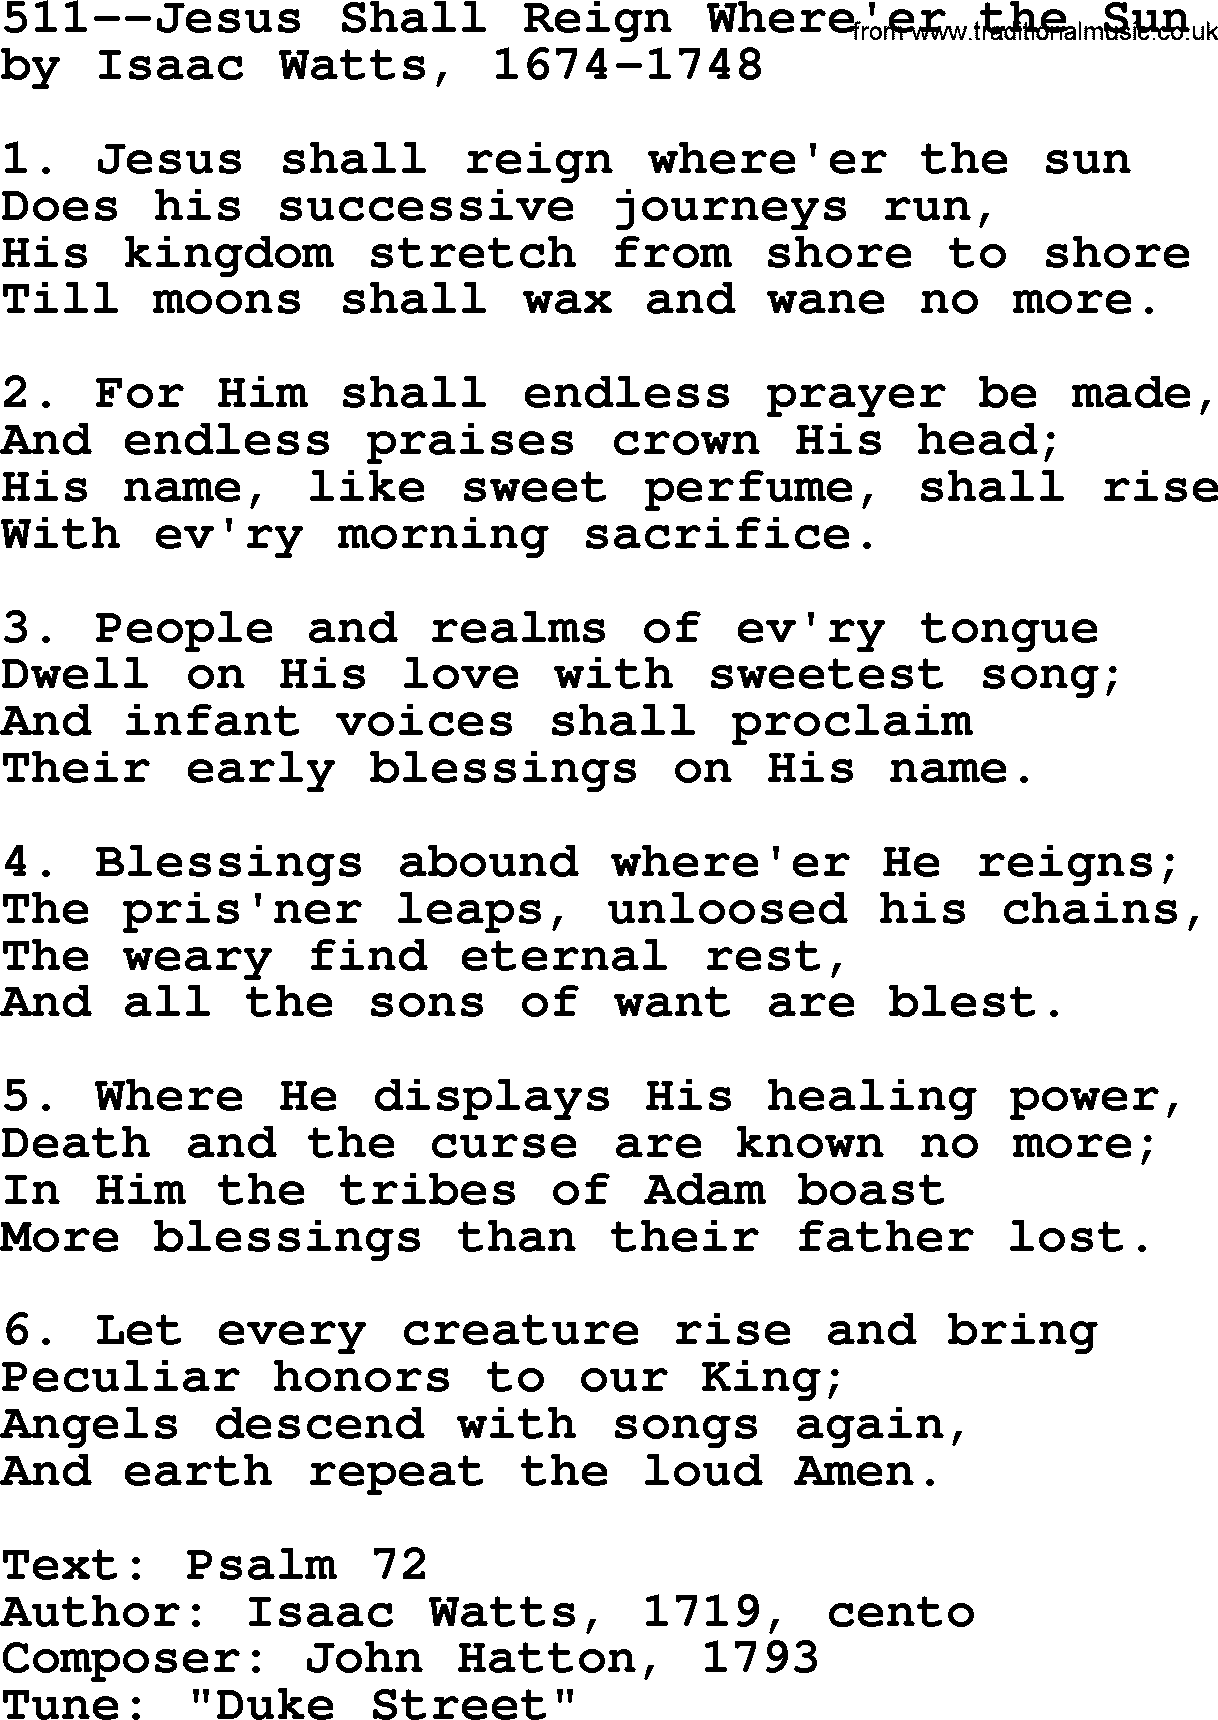 Lutheran Hymn: 511--Jesus Shall Reign Where'er the Sun.txt lyrics with PDF